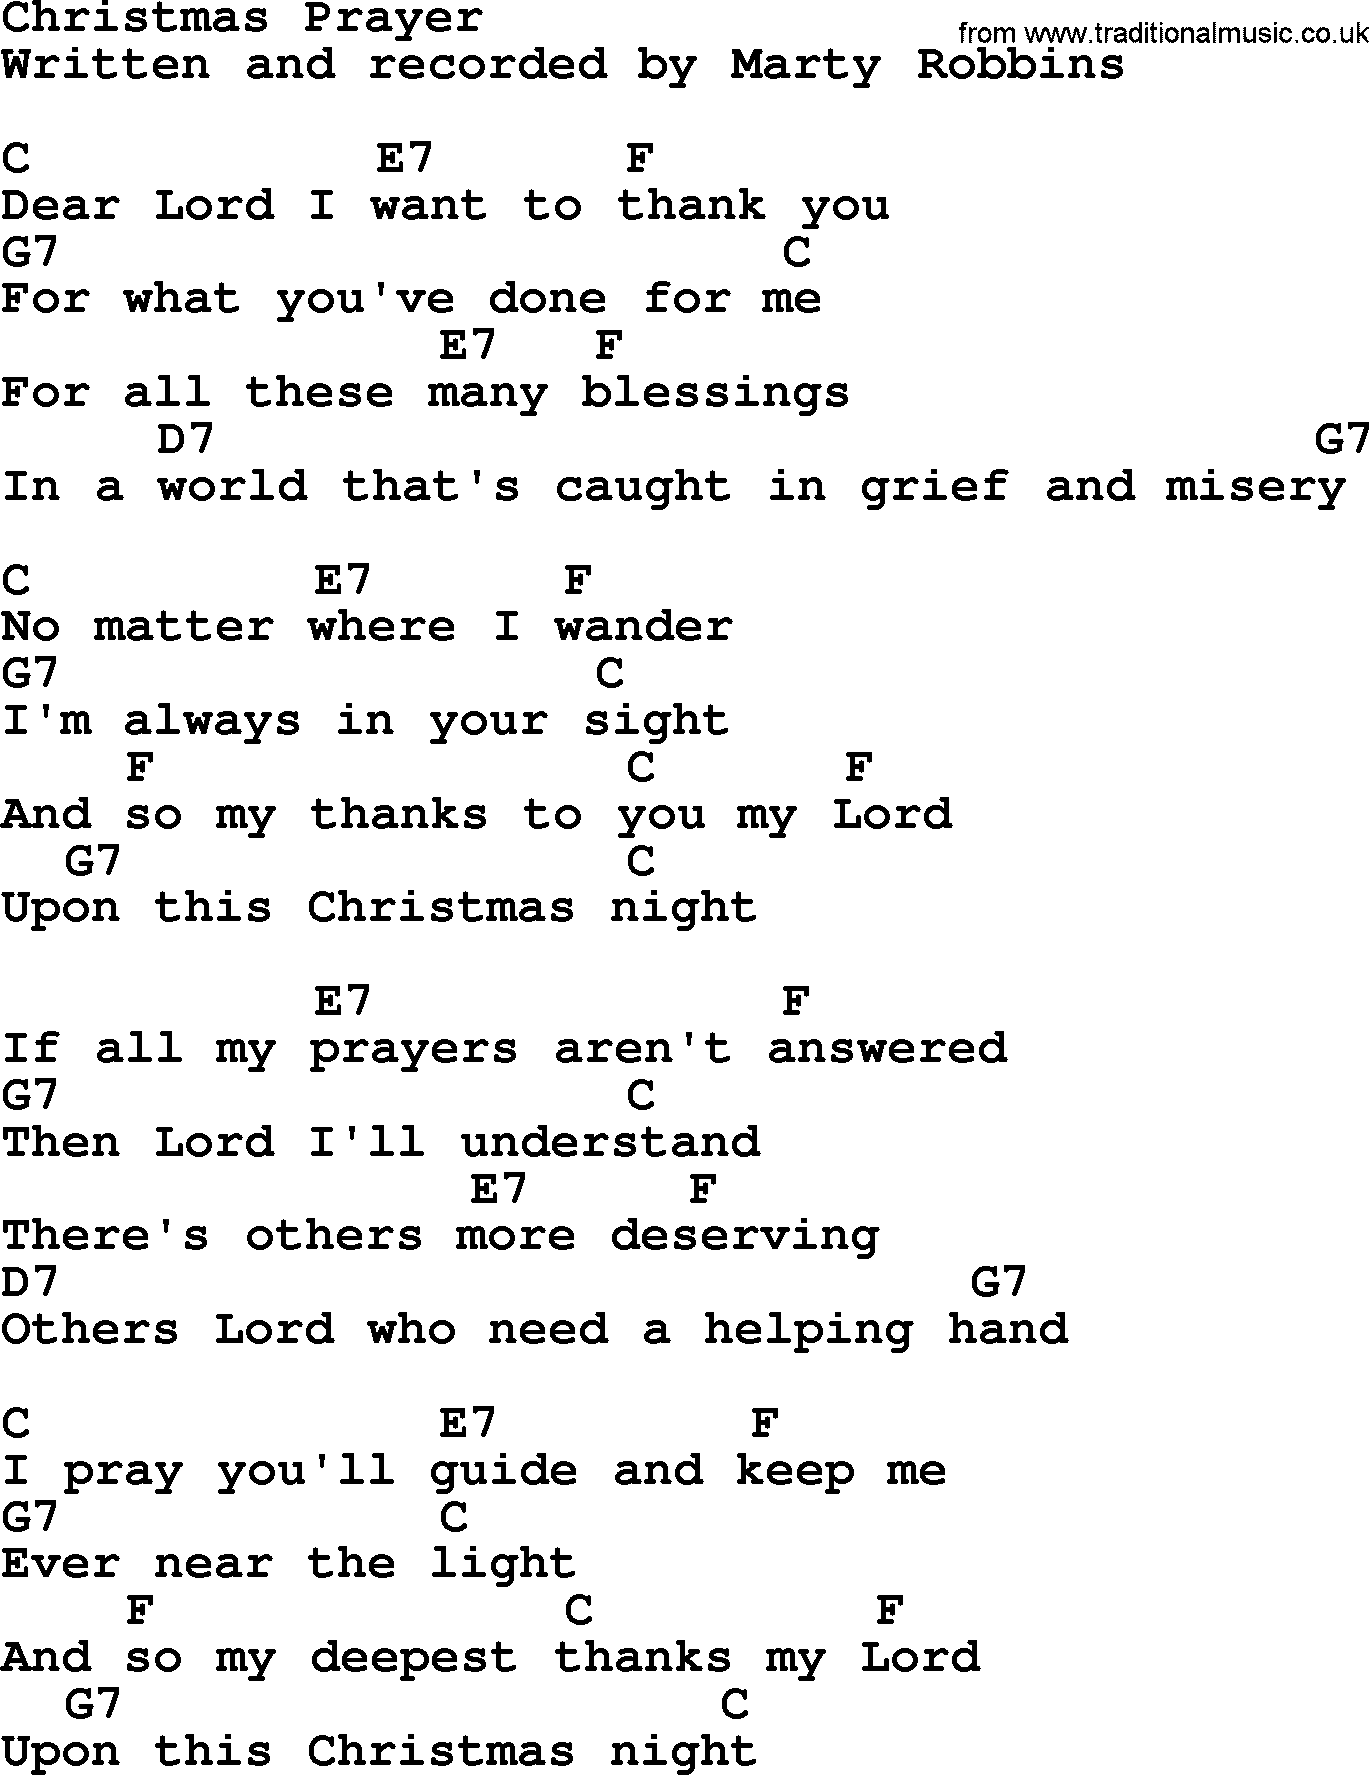 Marty Robbins song: Christmas Prayer, lyrics and chords